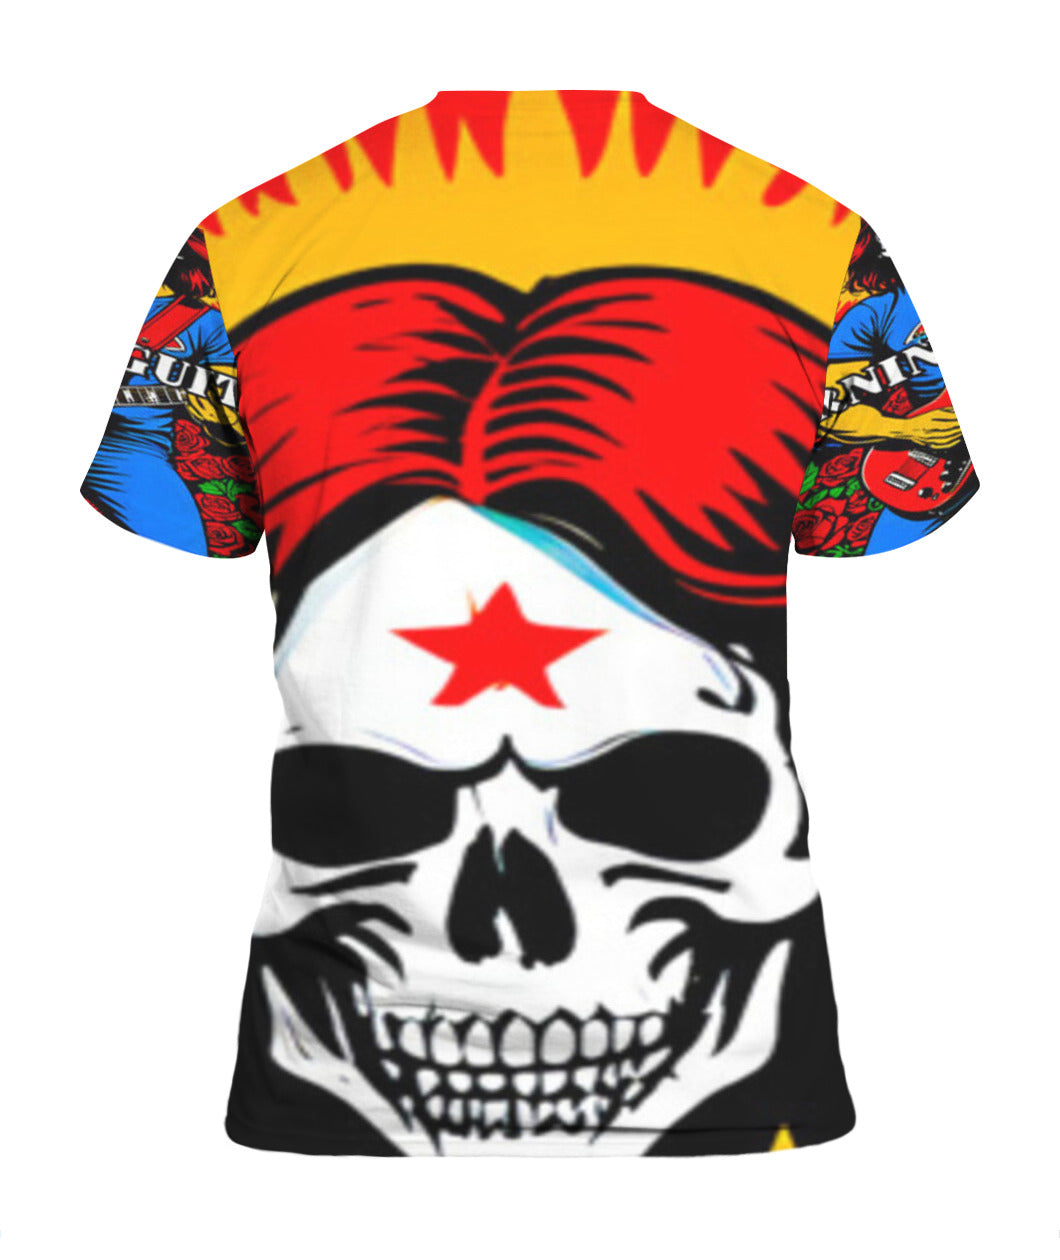 BG Skull Rockstar Unisex T-Shirt by Burning Guitars 